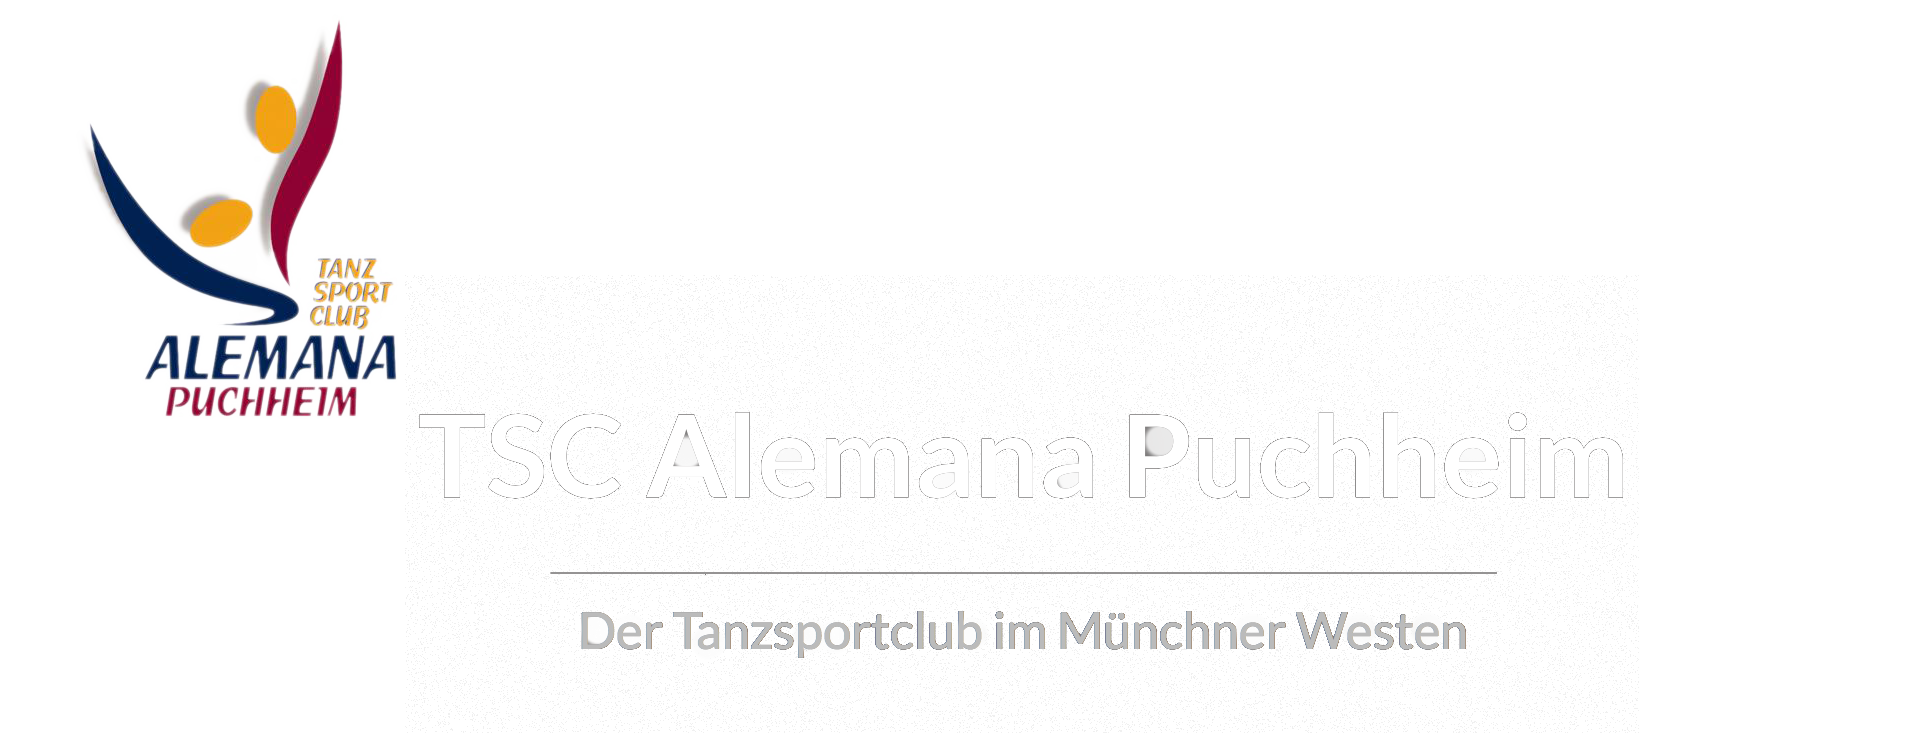 TSC Alemana Puchheim